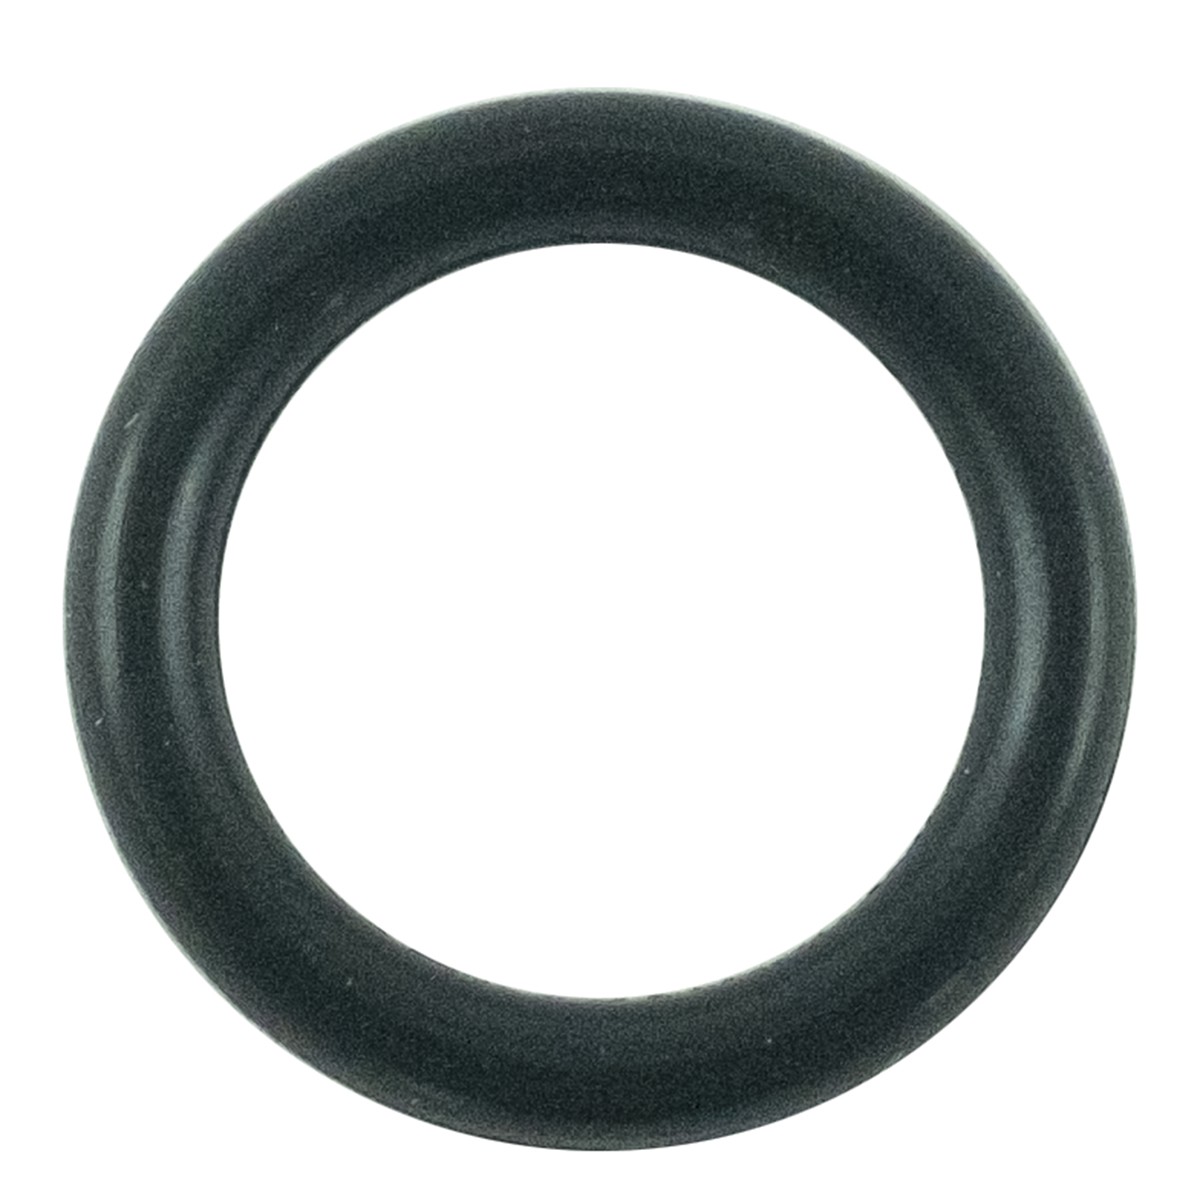 O-ring 9.80 x 1.90 mm LS MT1.25 / S801010010 / 40116417